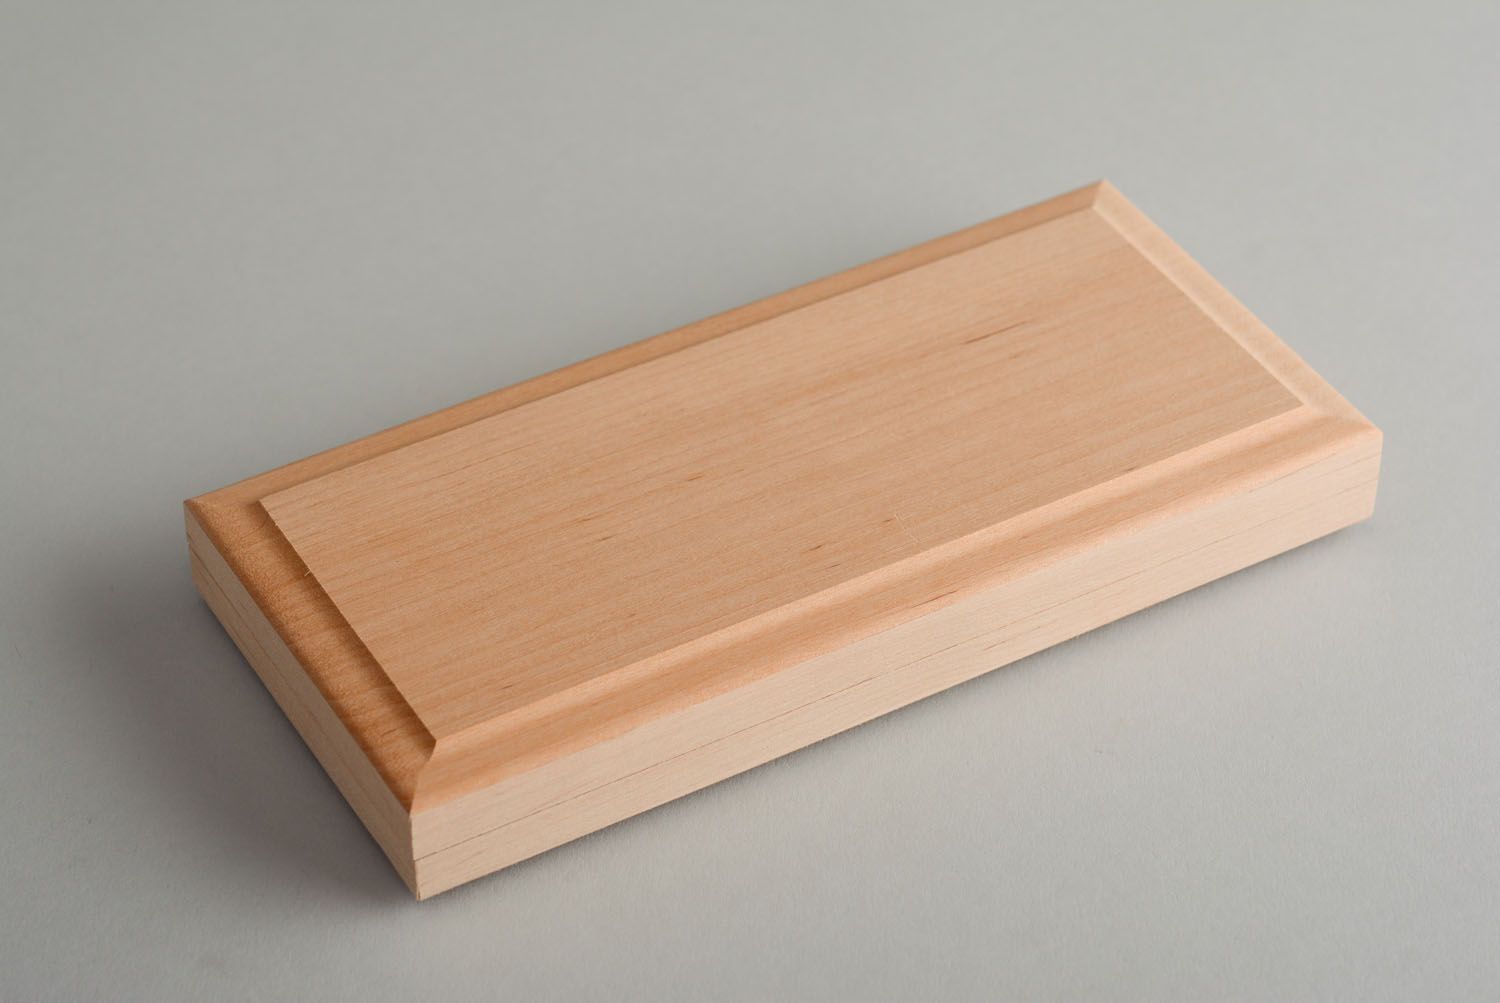 Base de madera para decoupage con forma de caja foto 1